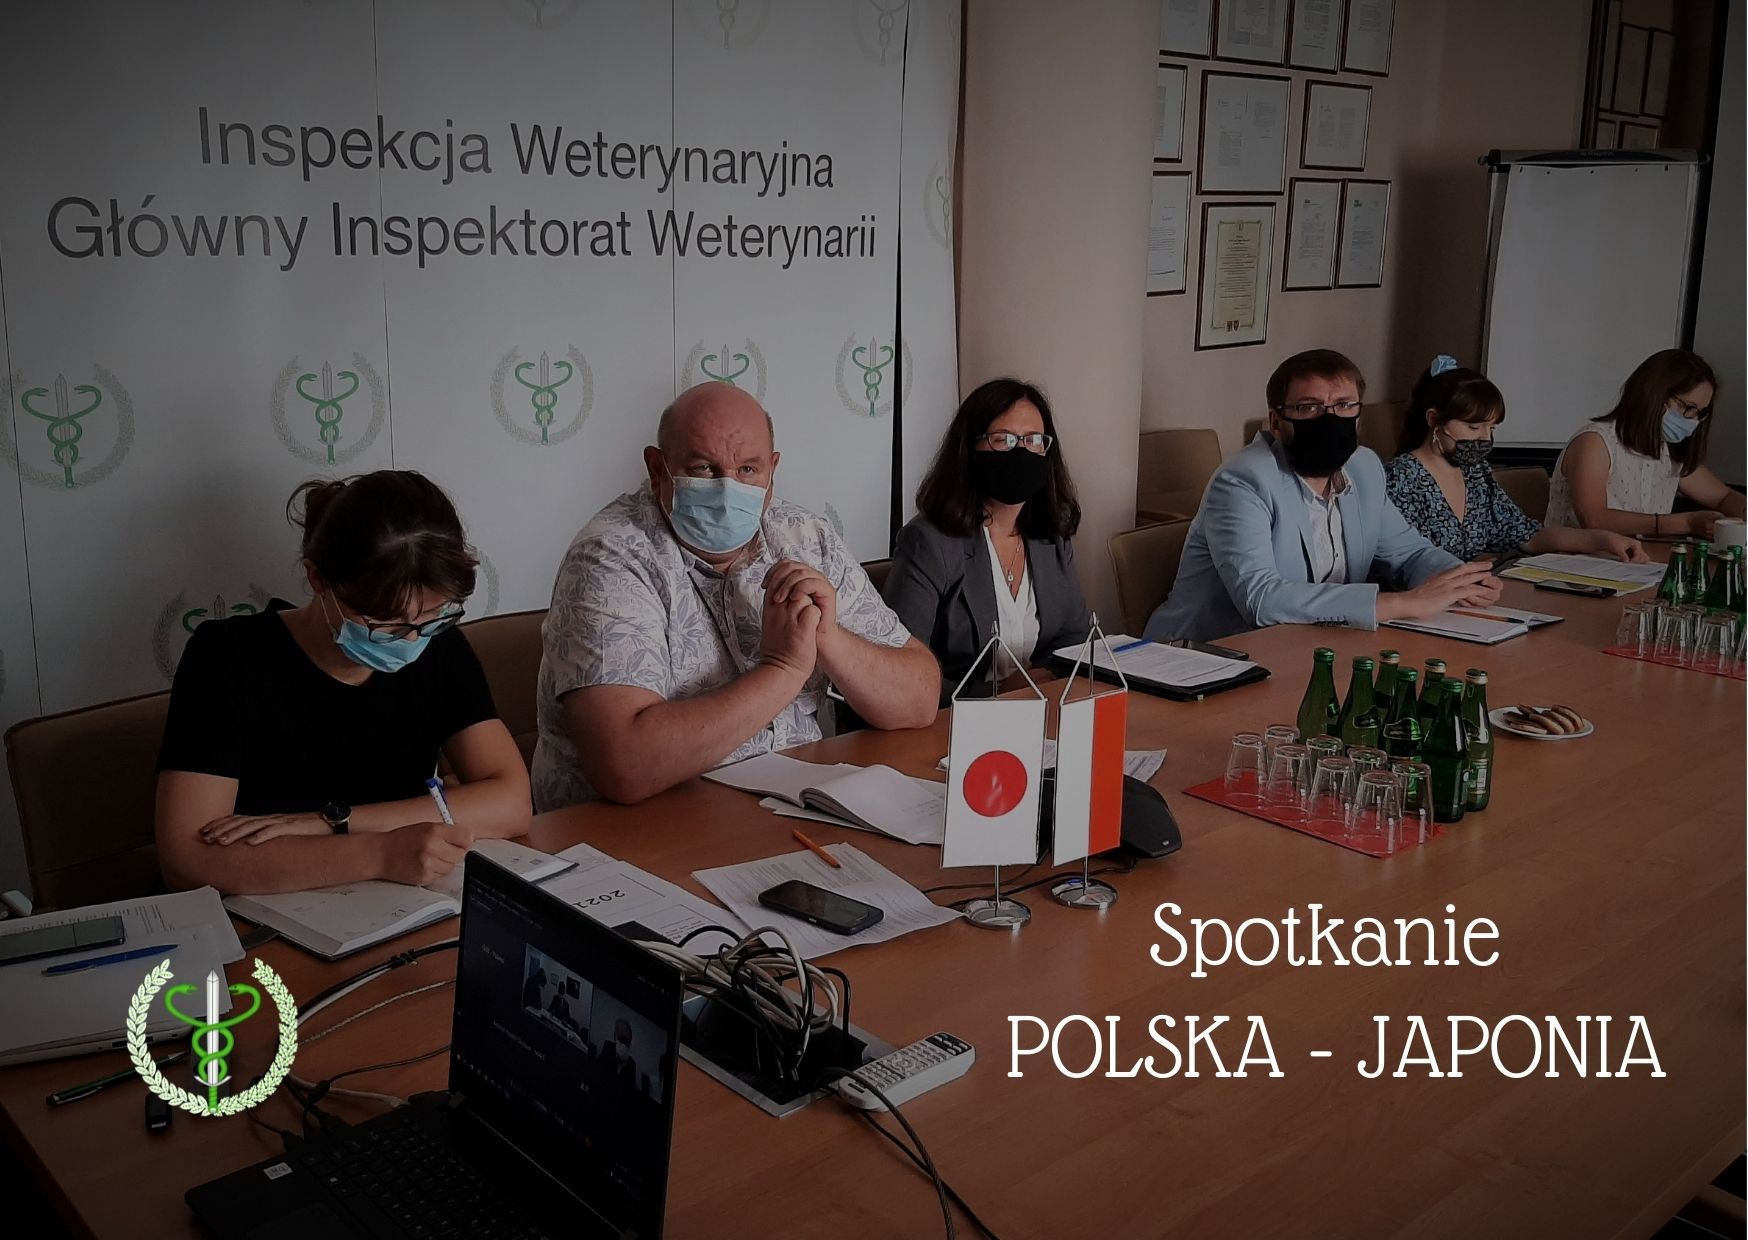 Polsko-japońska wideokonferencja dot. ASF